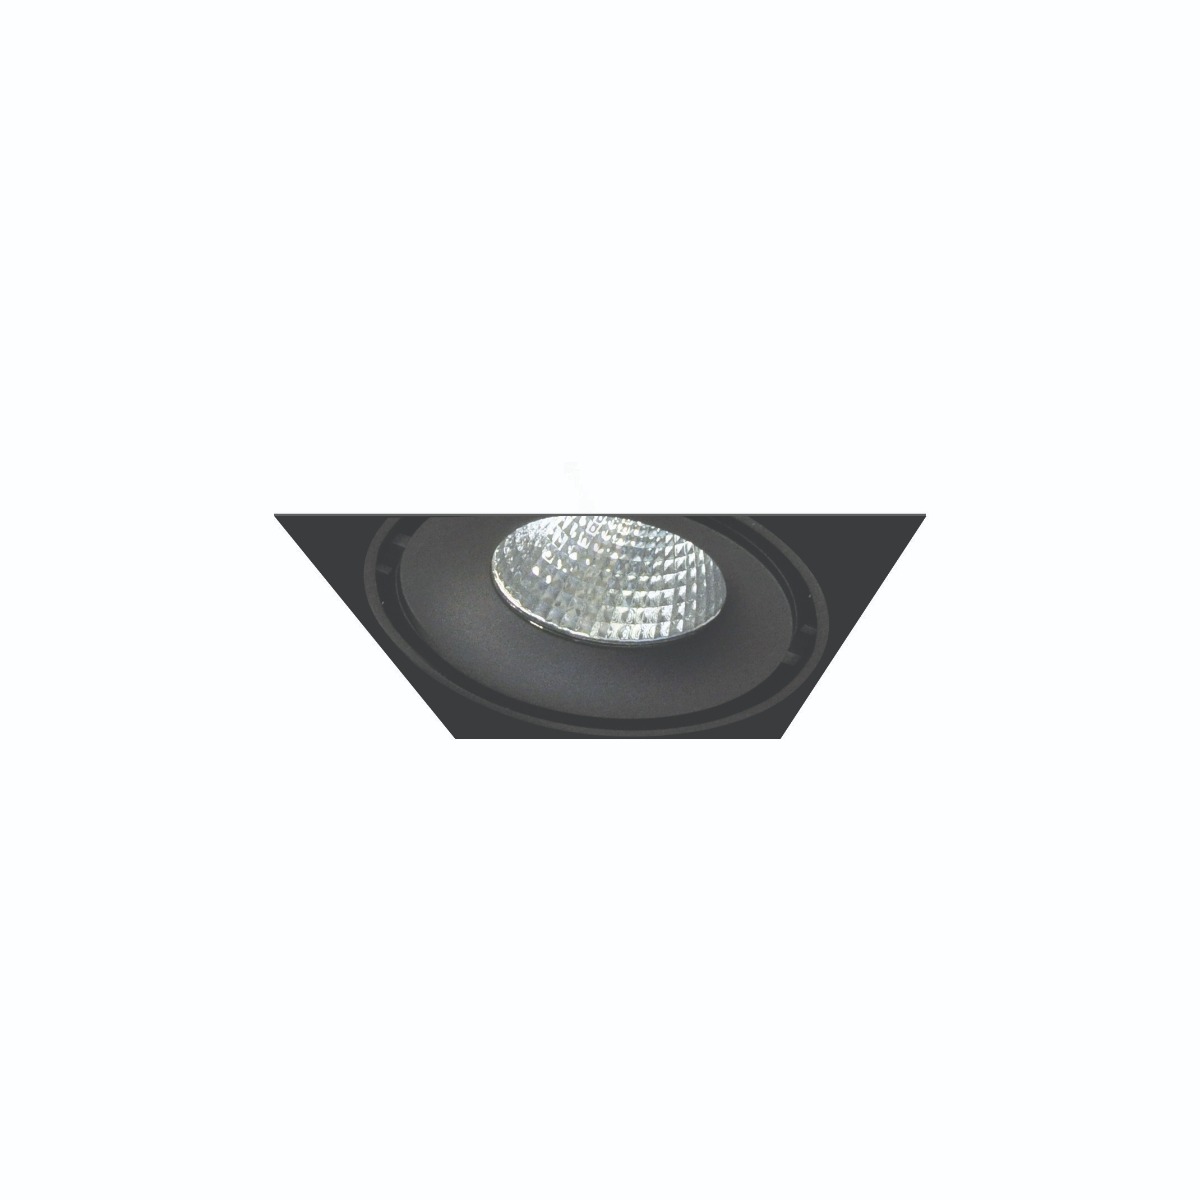 Alcon Lighting 14026-1 Oculare Architectural LED Trimless Adjustable 1 Head Multiple Recessed Lighti